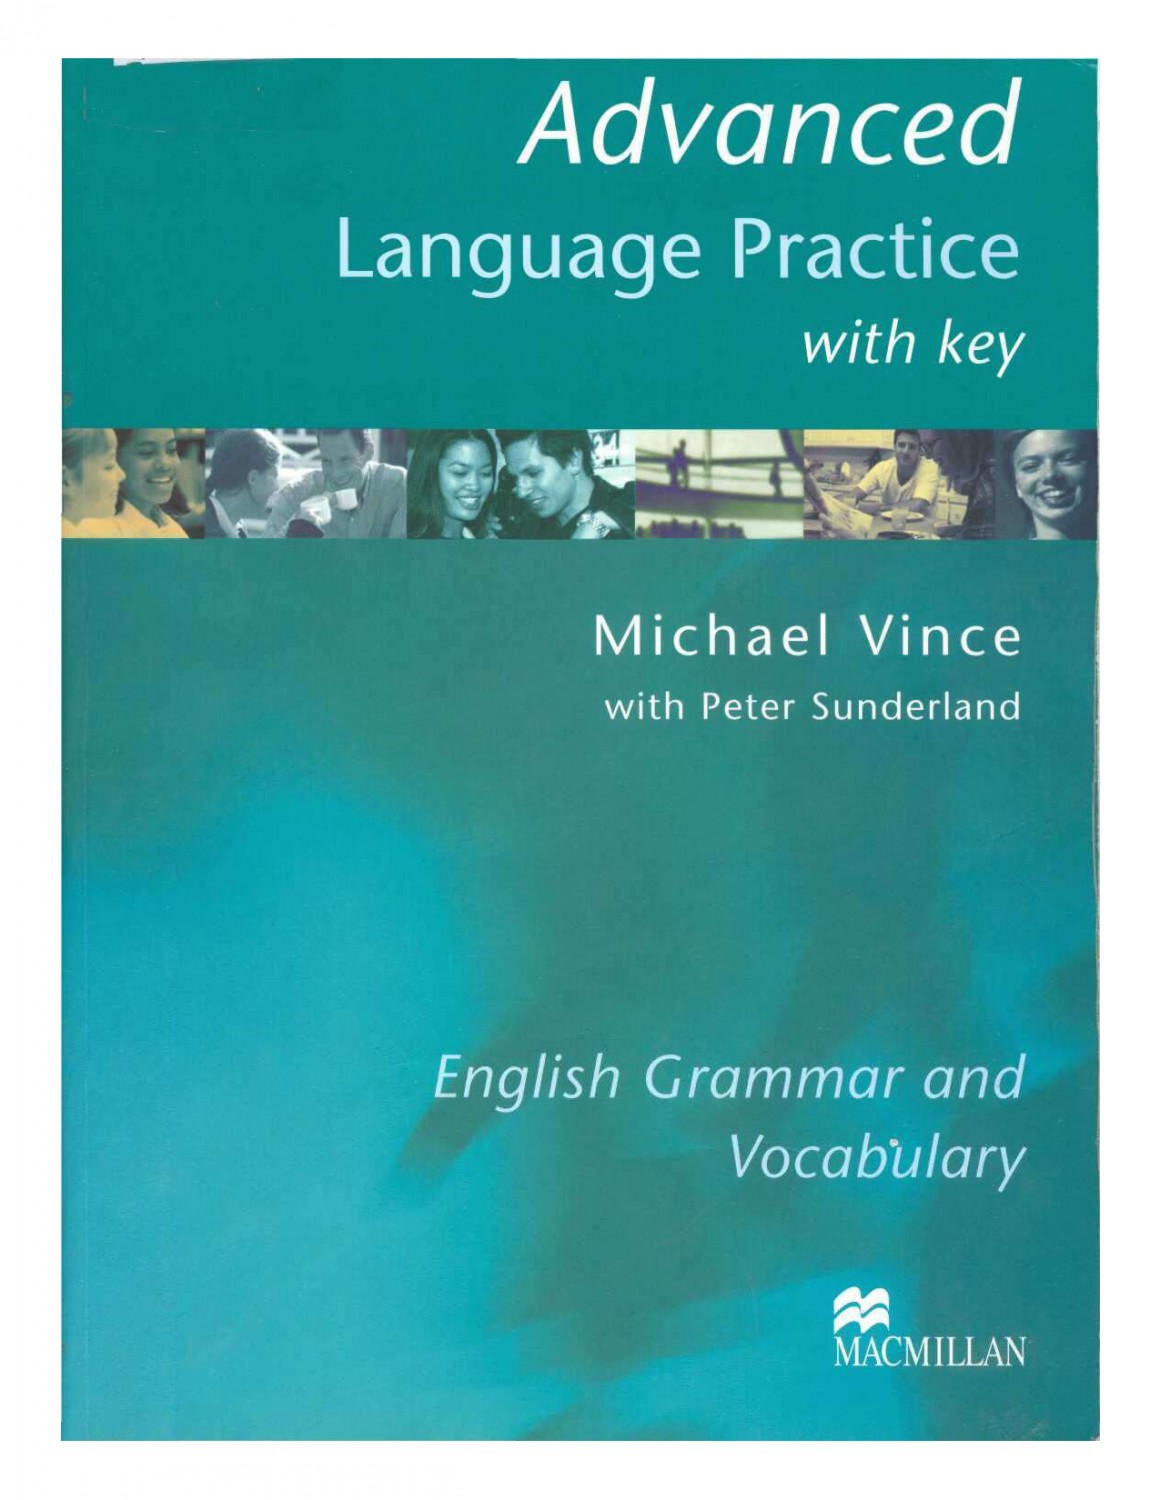 Advance language practice